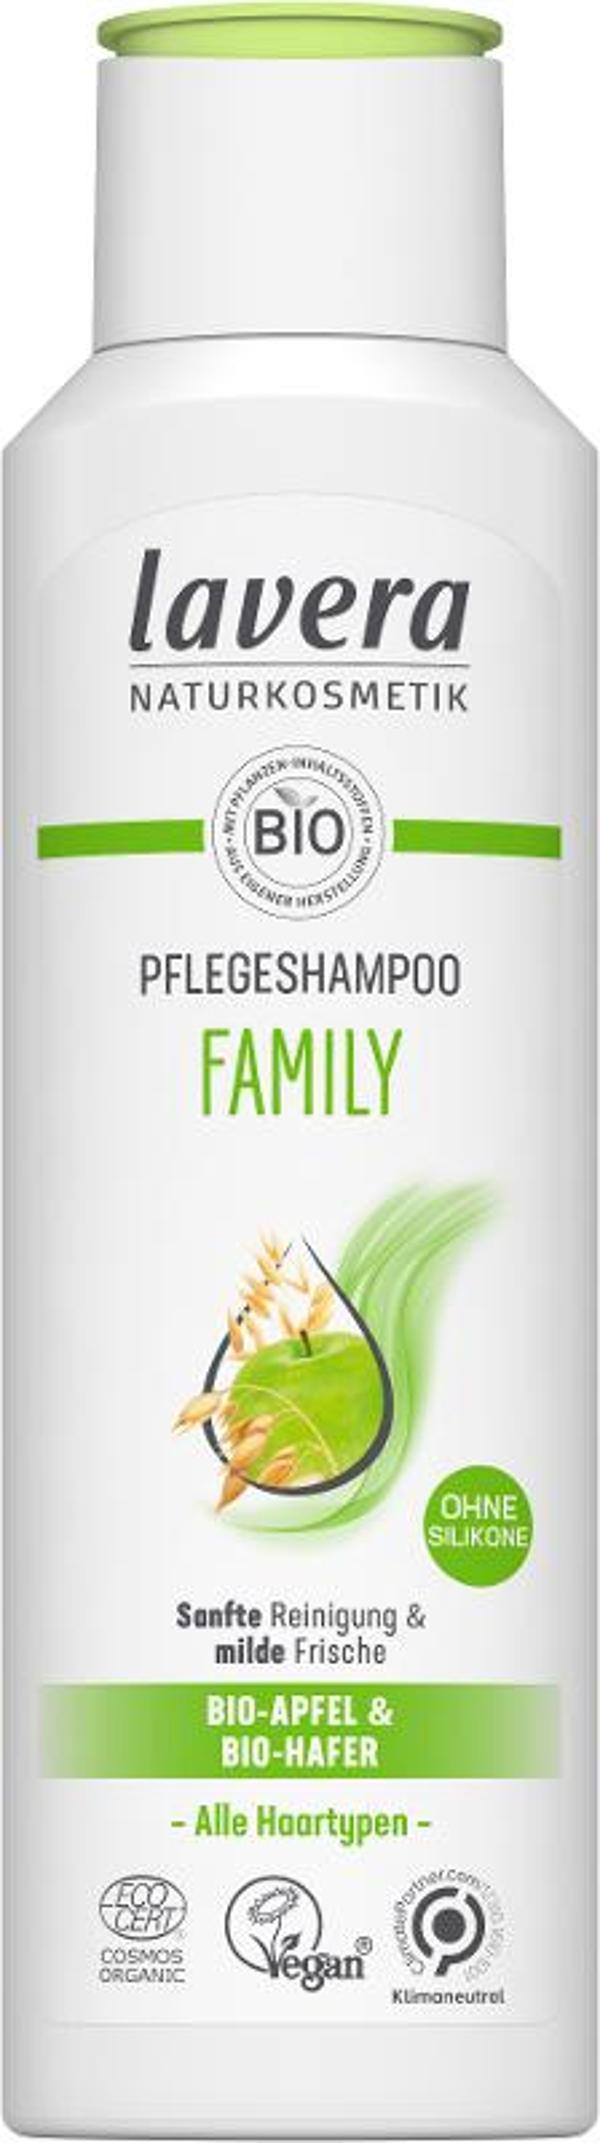 Produktfoto zu Shampoo Family